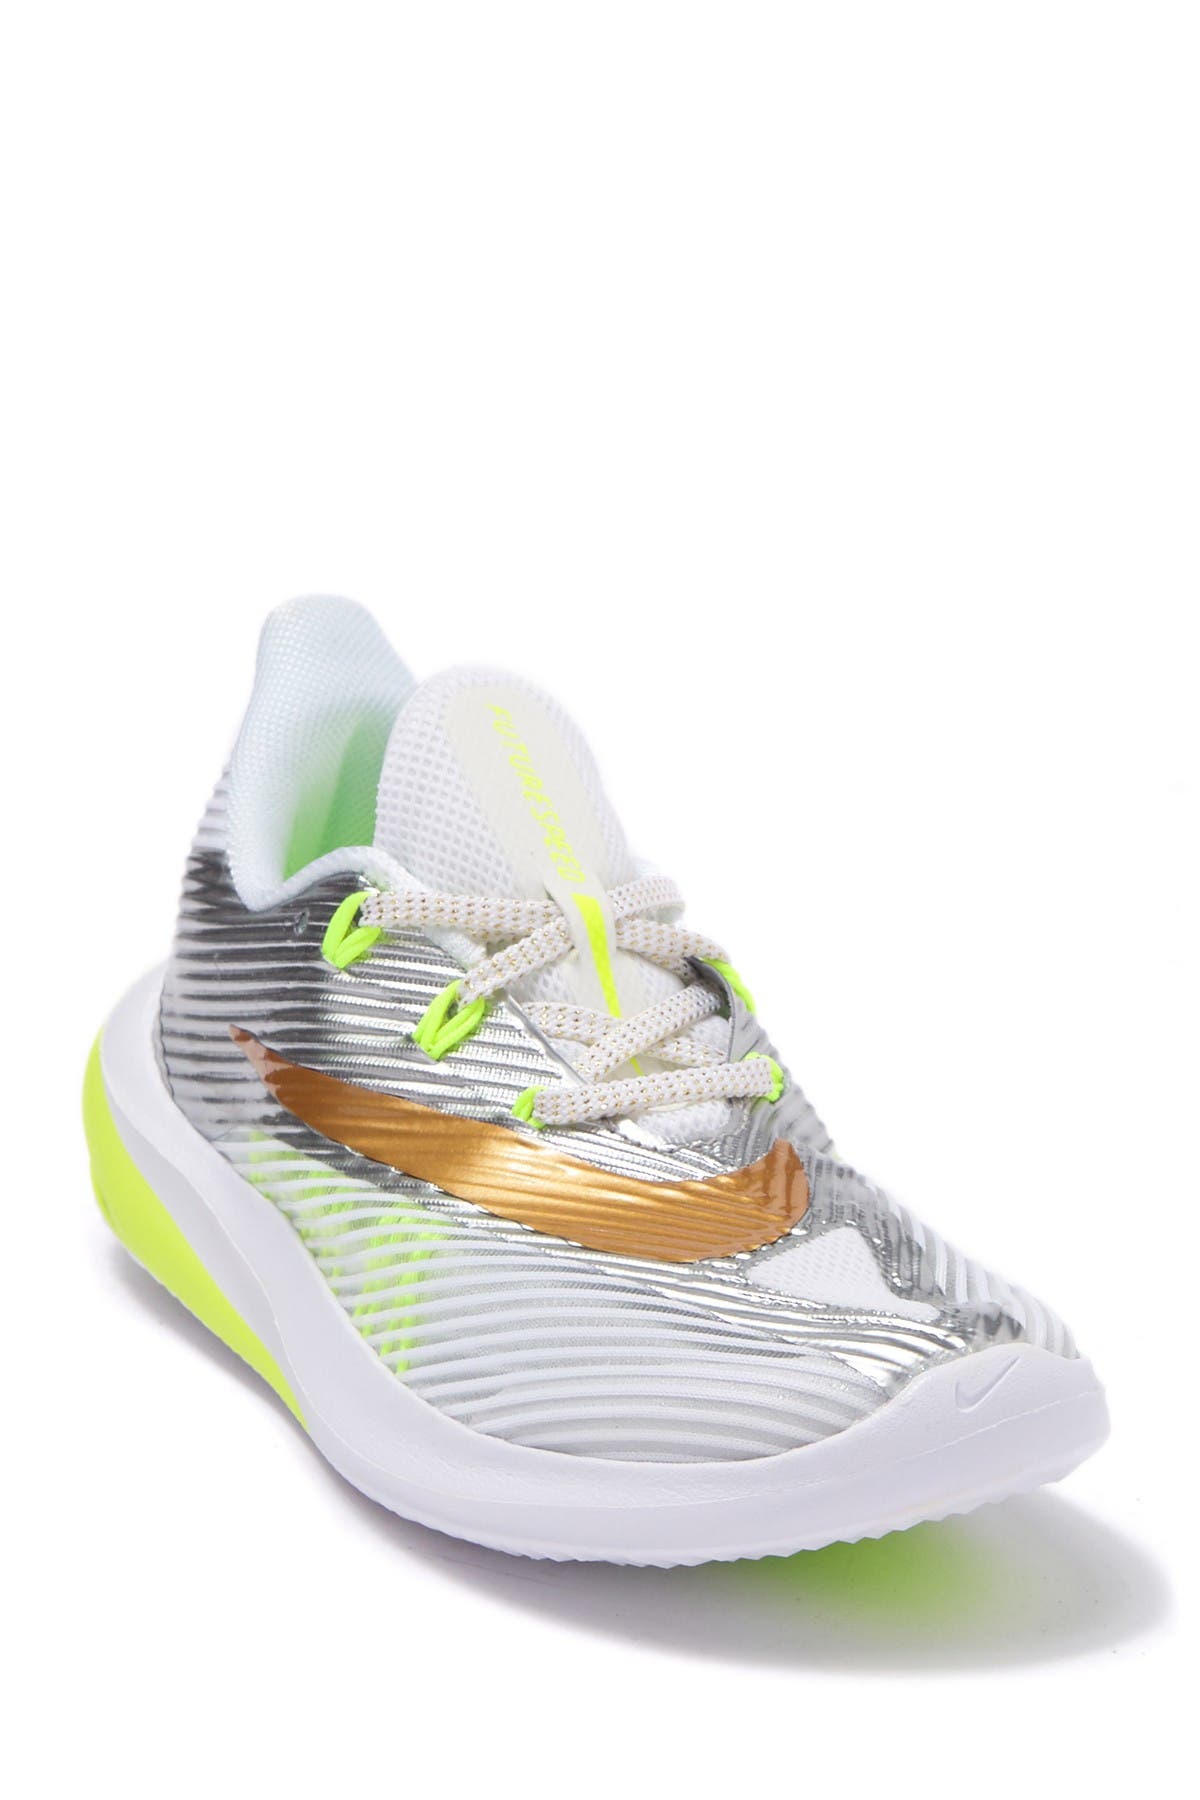 Nike | Future Speed Running Shoe 